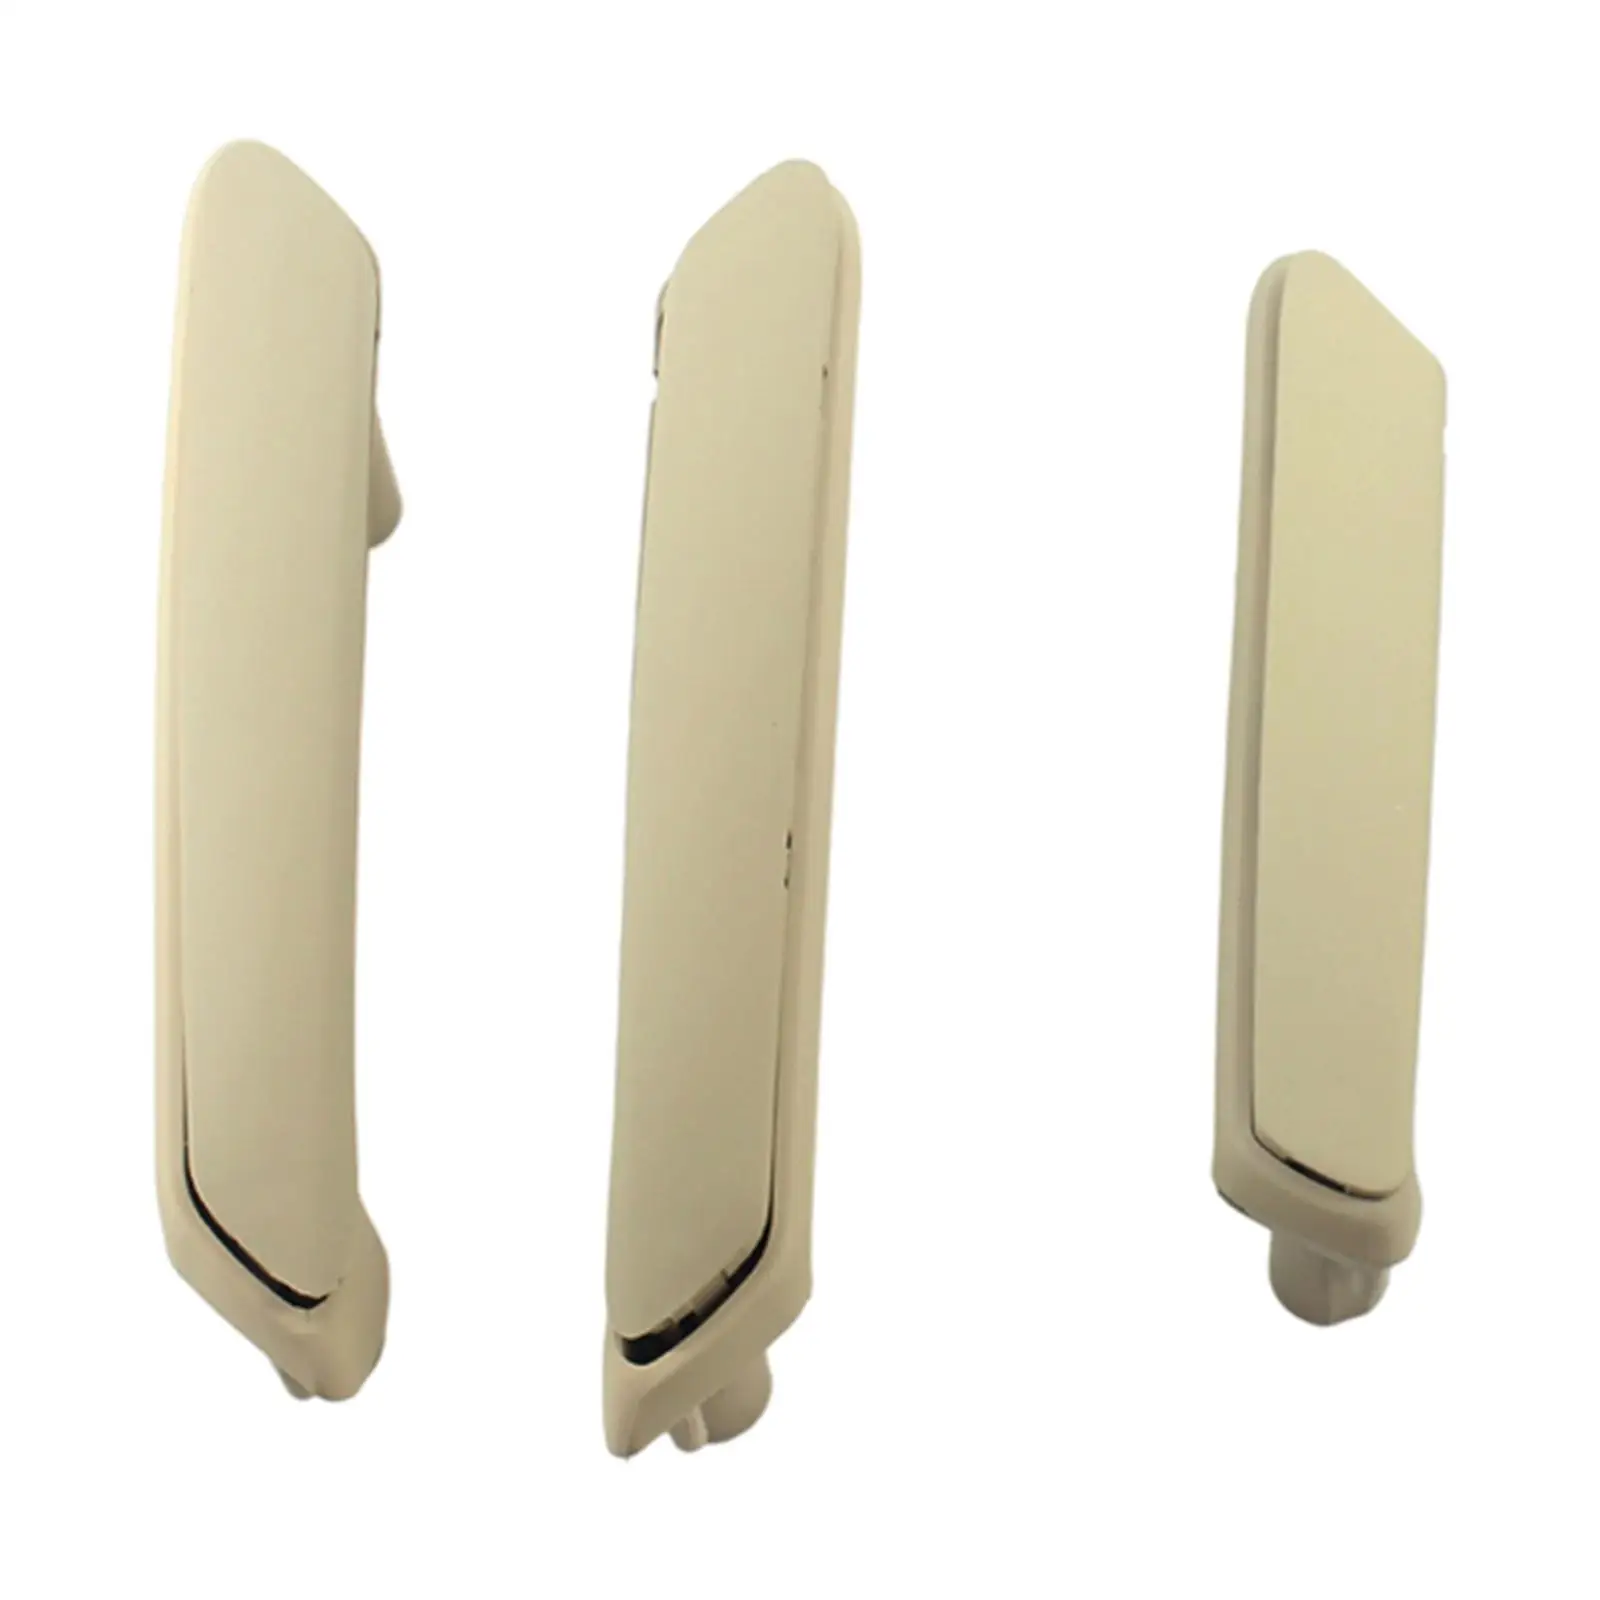 3Pcs Kit Interior Door Pull Grab Handle Direct Replaces Premium Material, 1 Piece Short handle 2 Pieces Long handles